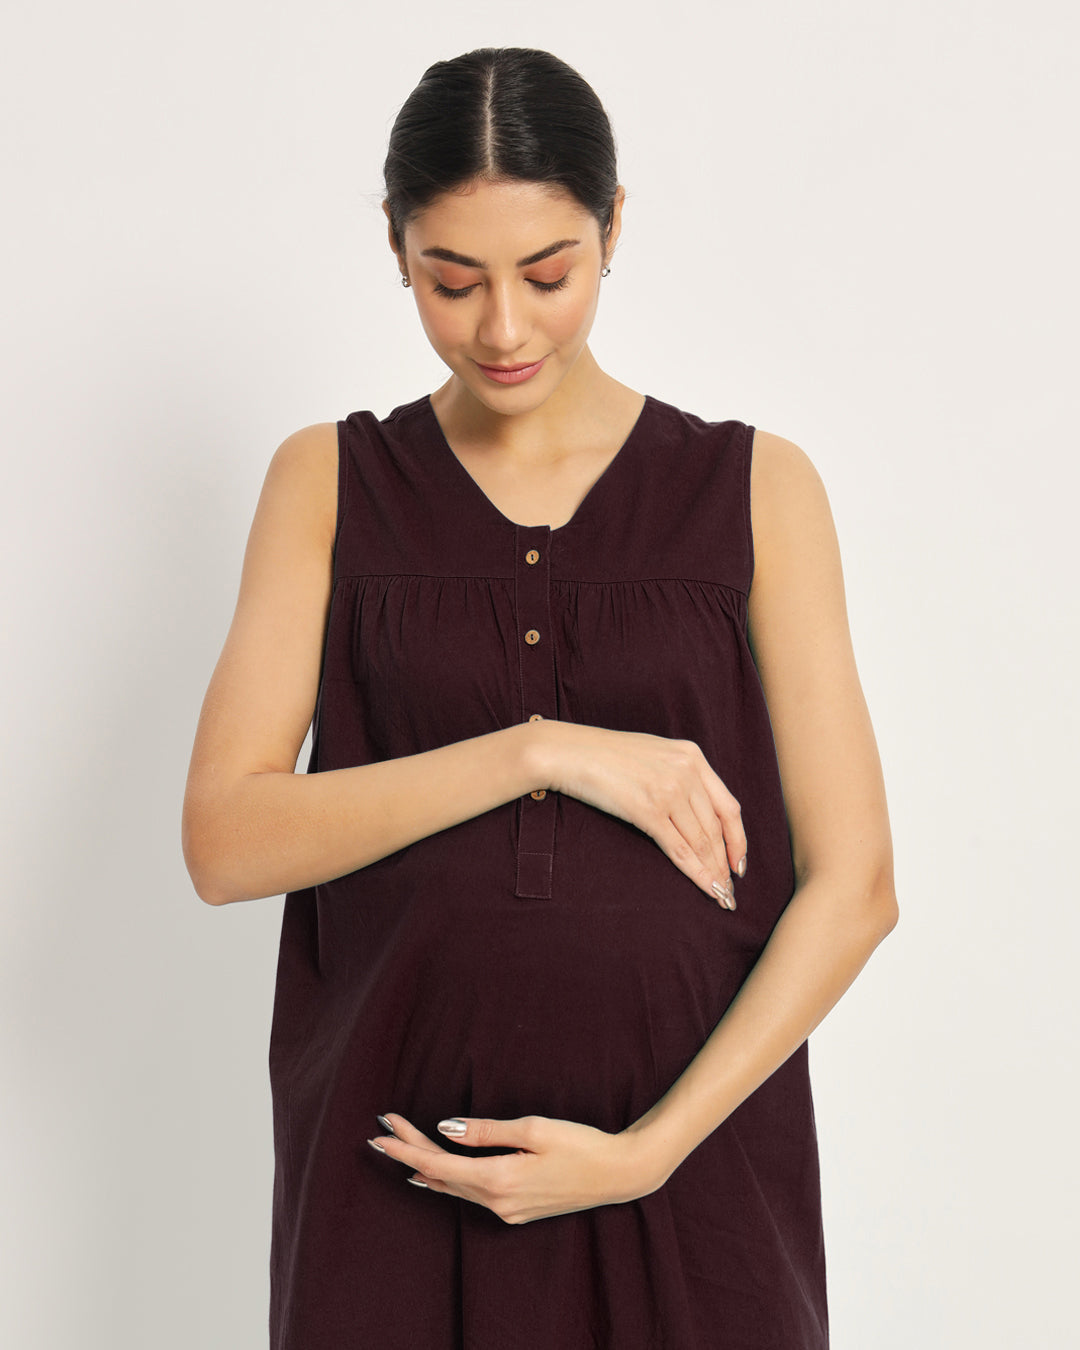 Plum Passion Mommylicious Maternity & Nursing Dress